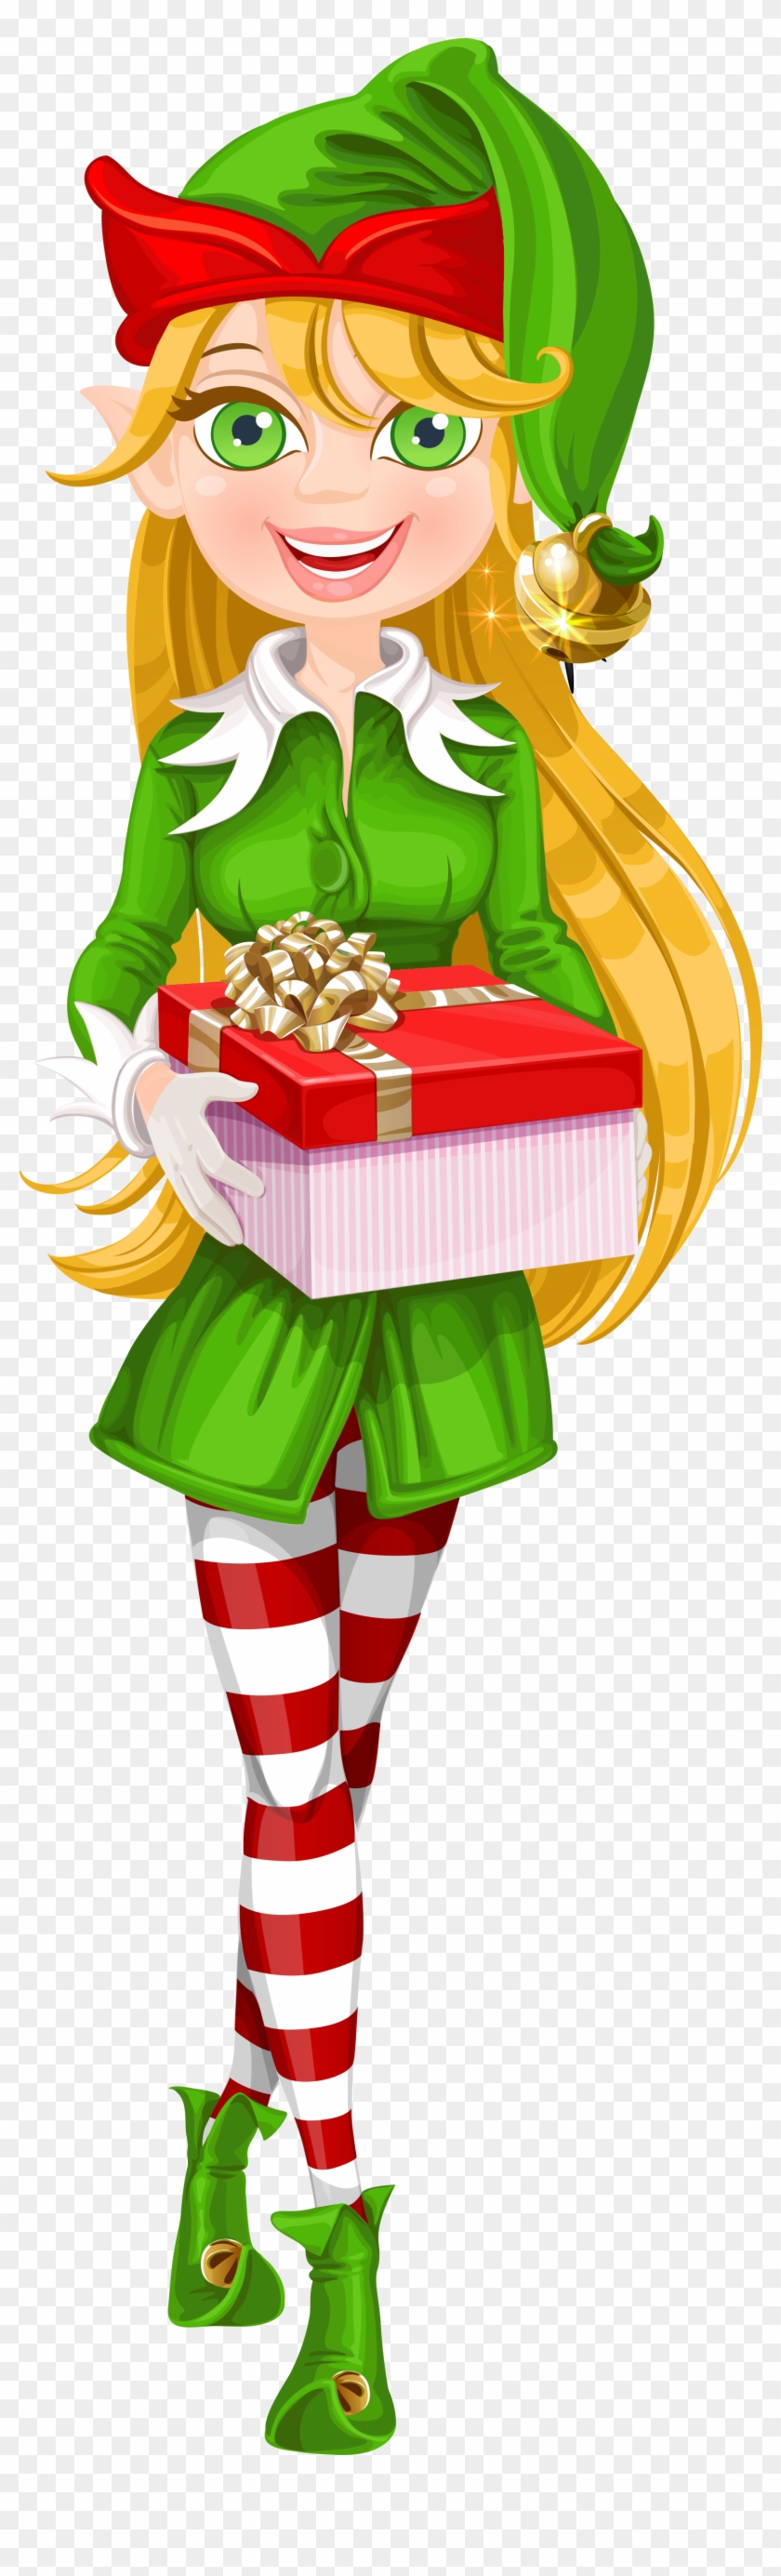 Christmas Elf Transparent Png Clip Art Image - Christmas Elf #527183